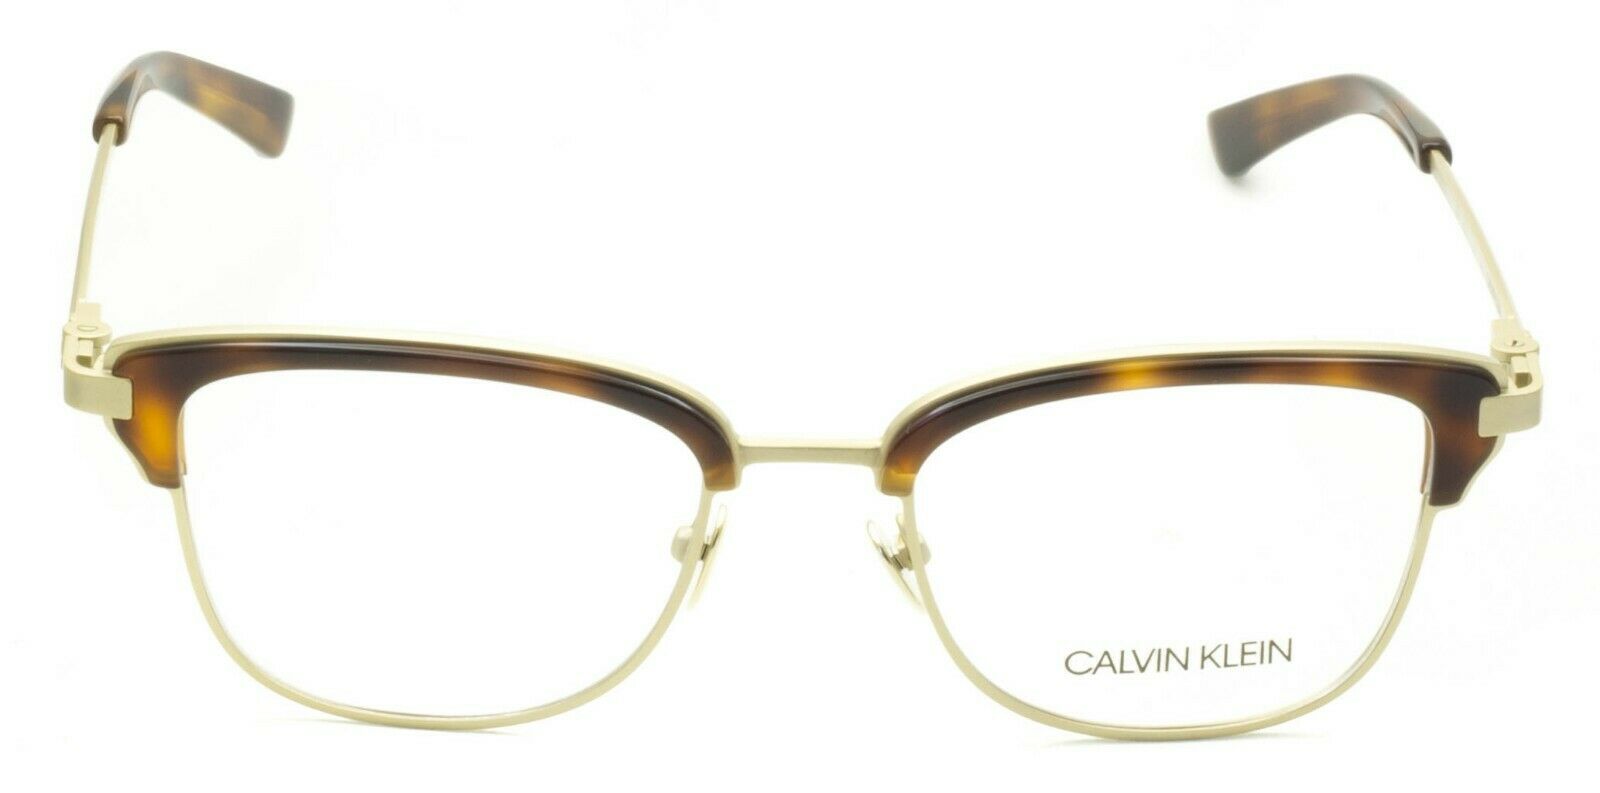 CALVIN KLEIN CK8066 218 51mm Eyewear RX Optical FRAMES Eyeglasses Glasses - New